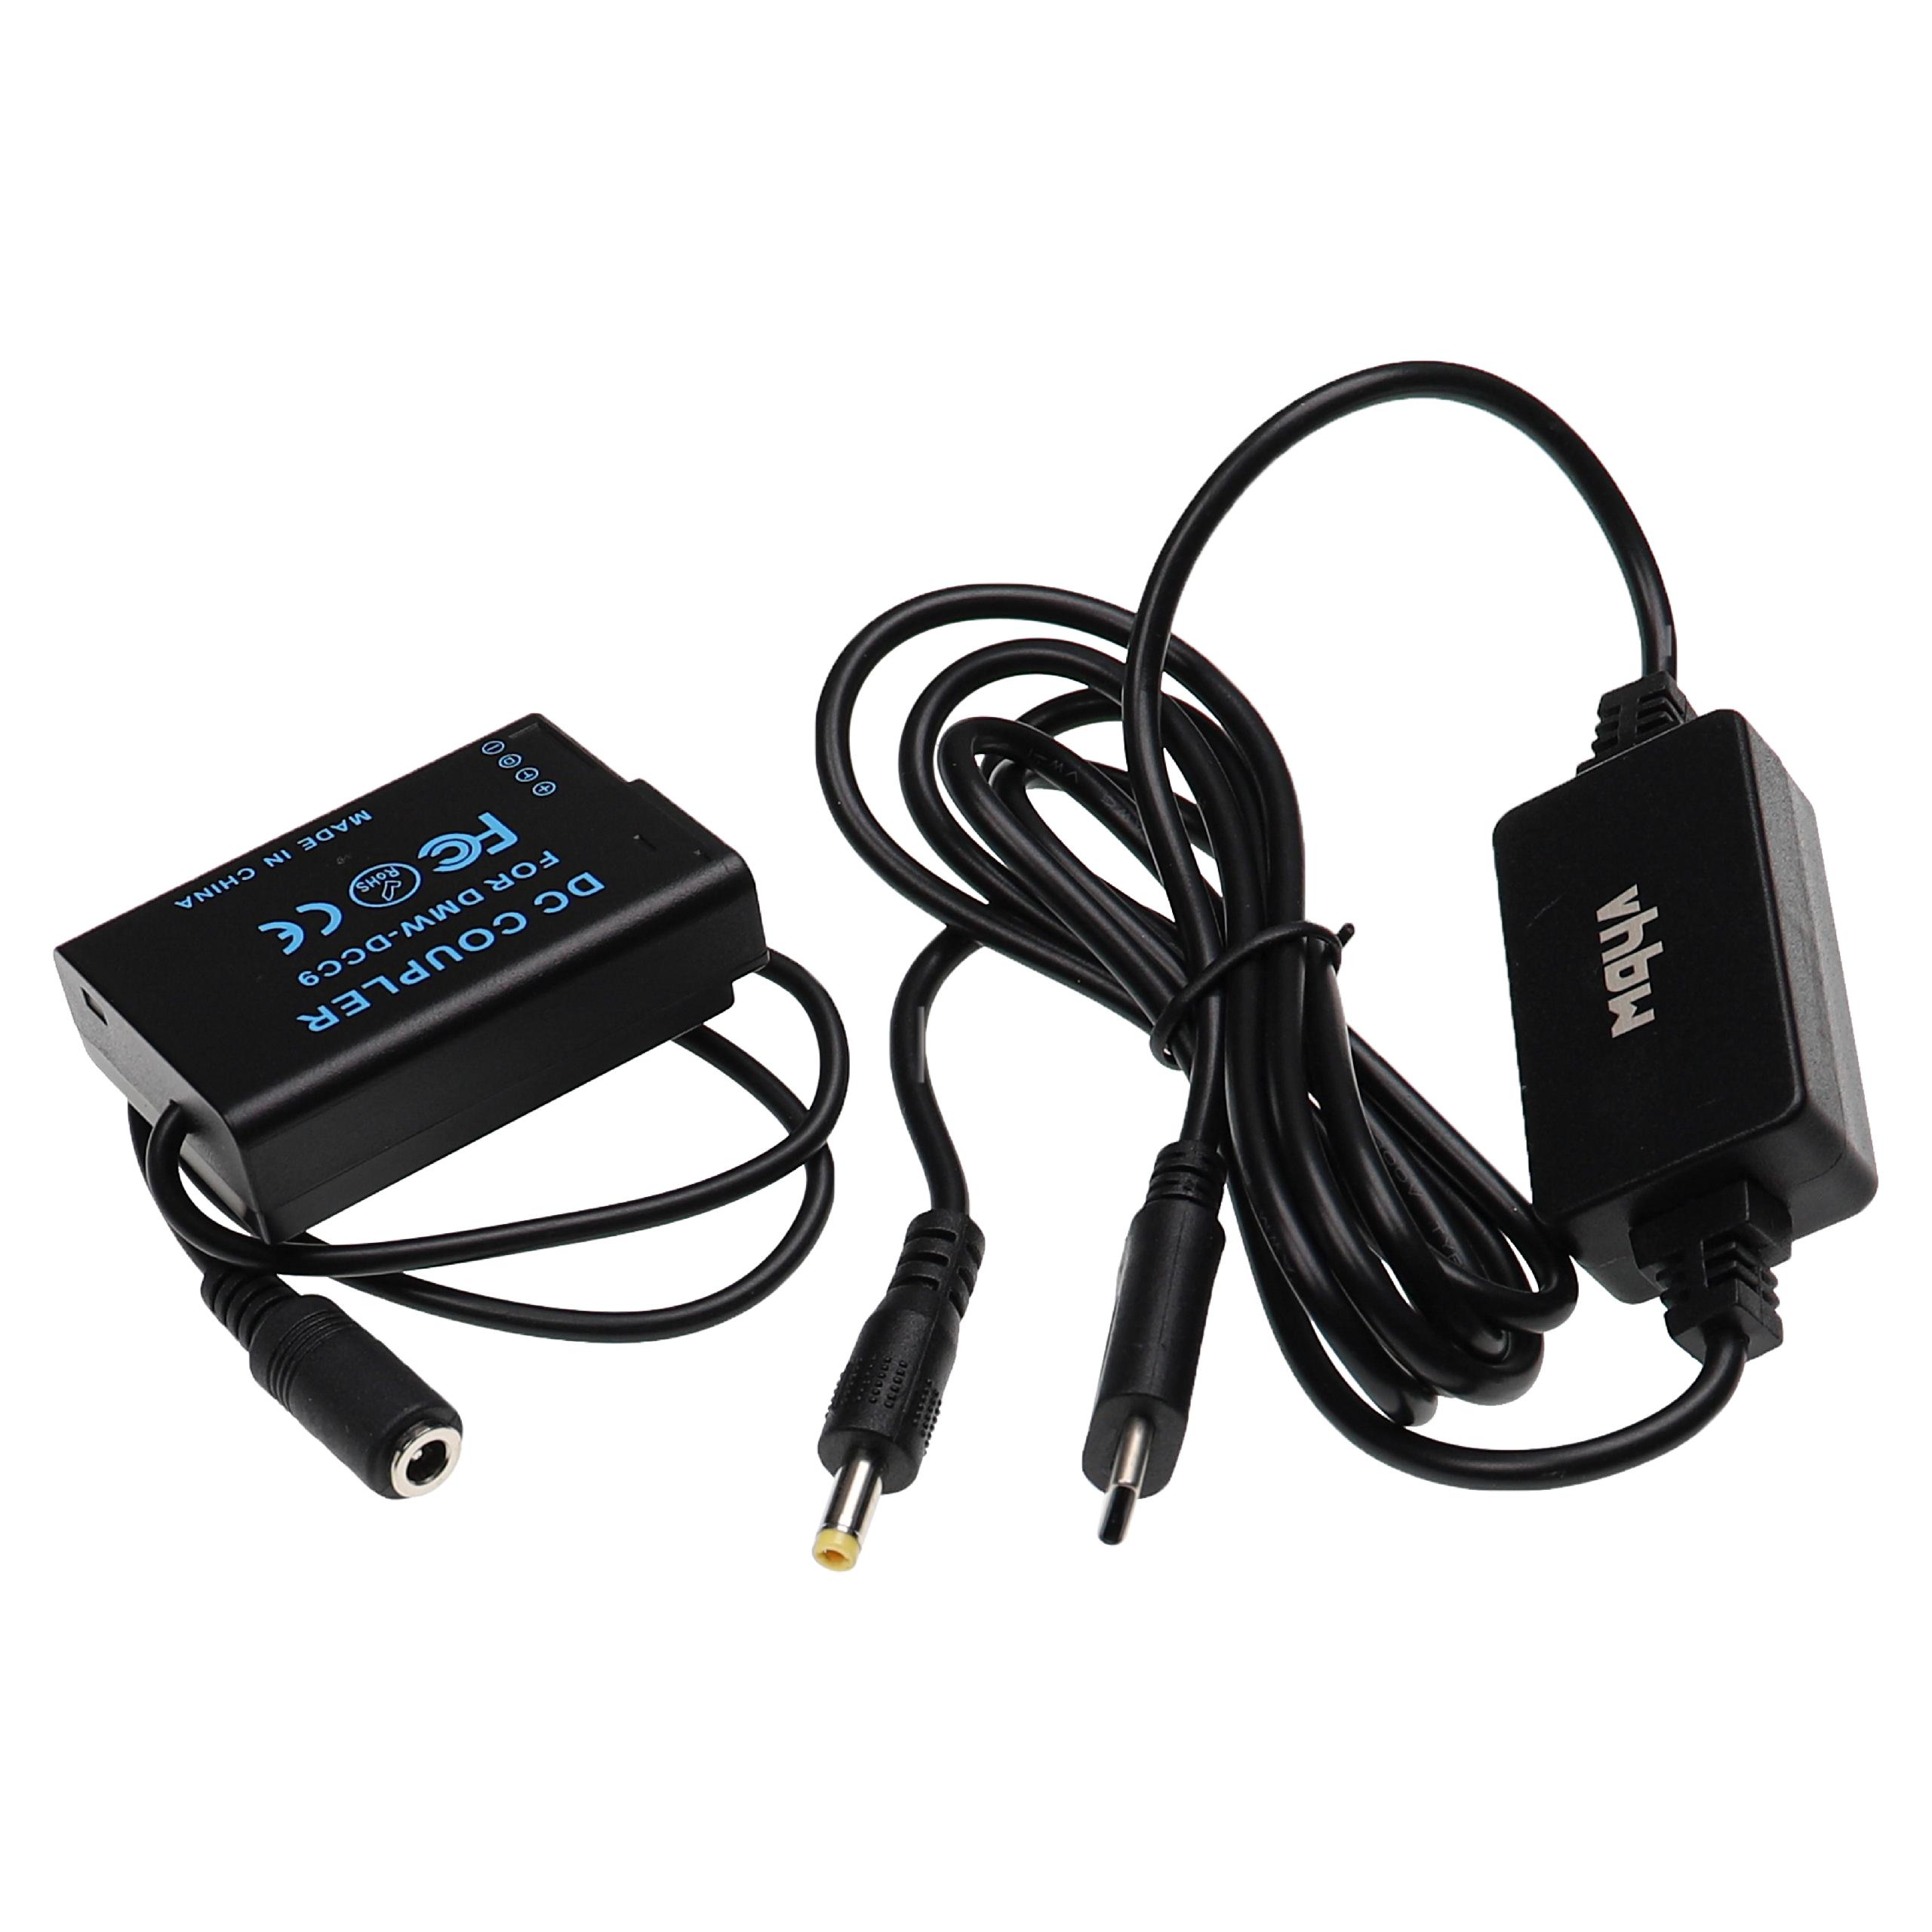 Fuente alimentación USB reemplaza Panasonic DMW-AC8 para cámaras + acoplador CC reemplaza Panasonic DMW-DCC9